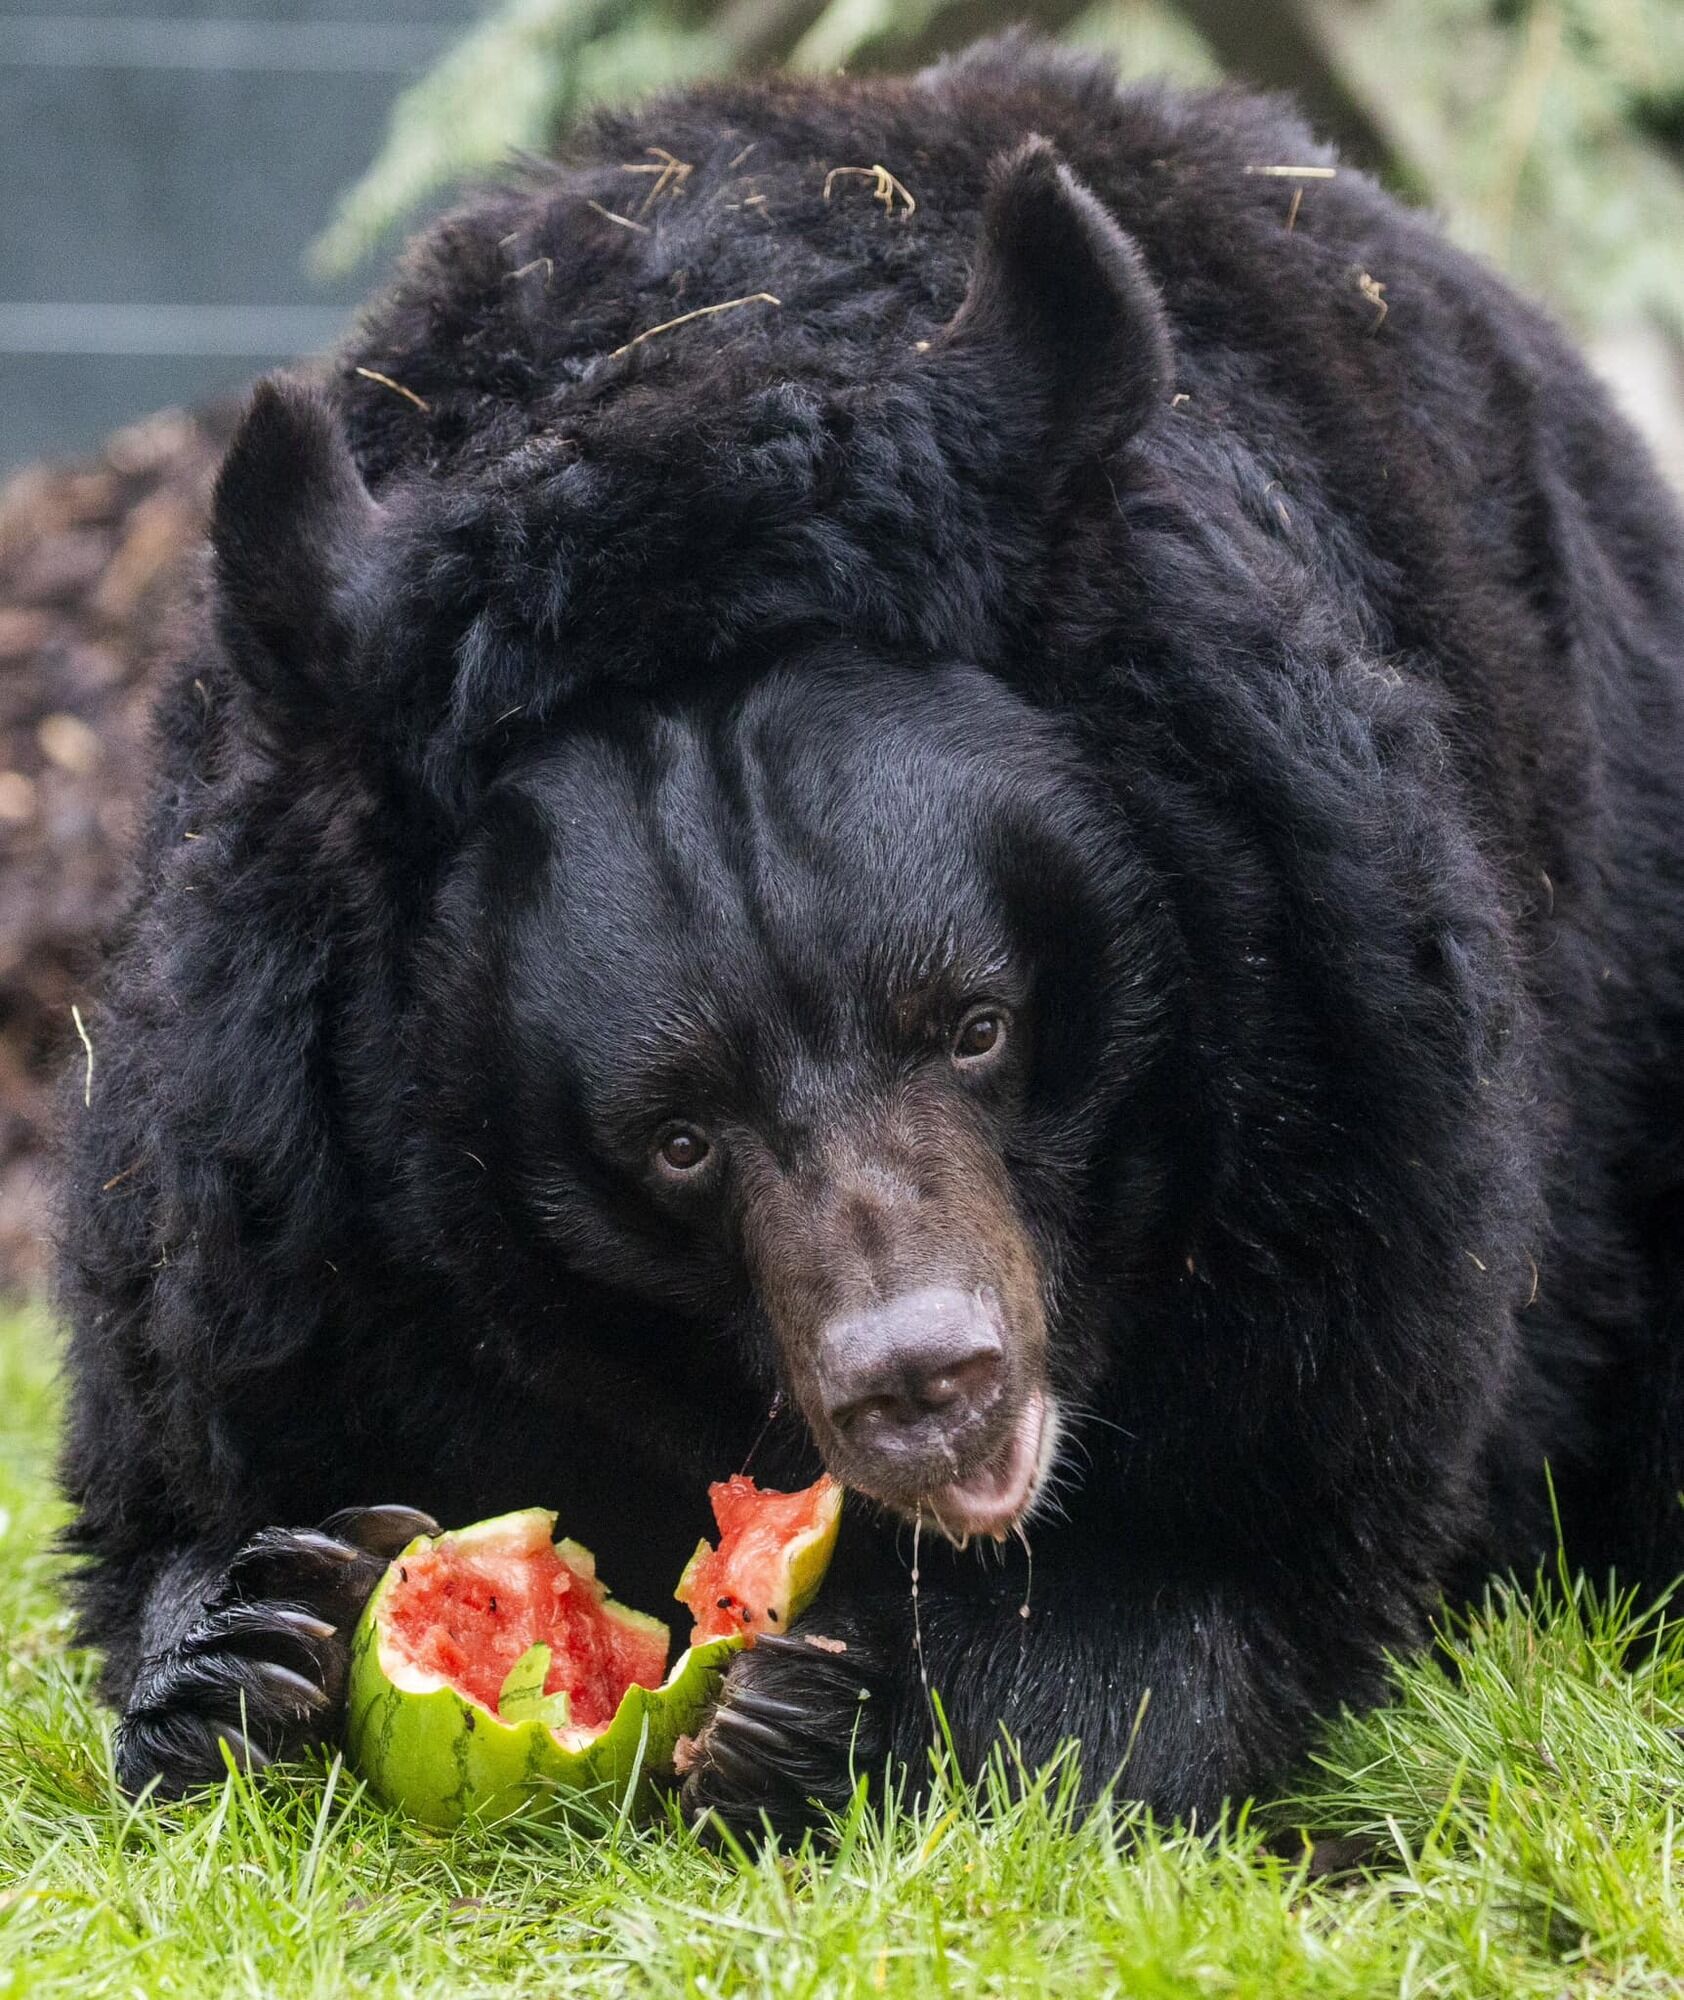 Bear rescued during shelling in Ukraine taken to Scottish zoo